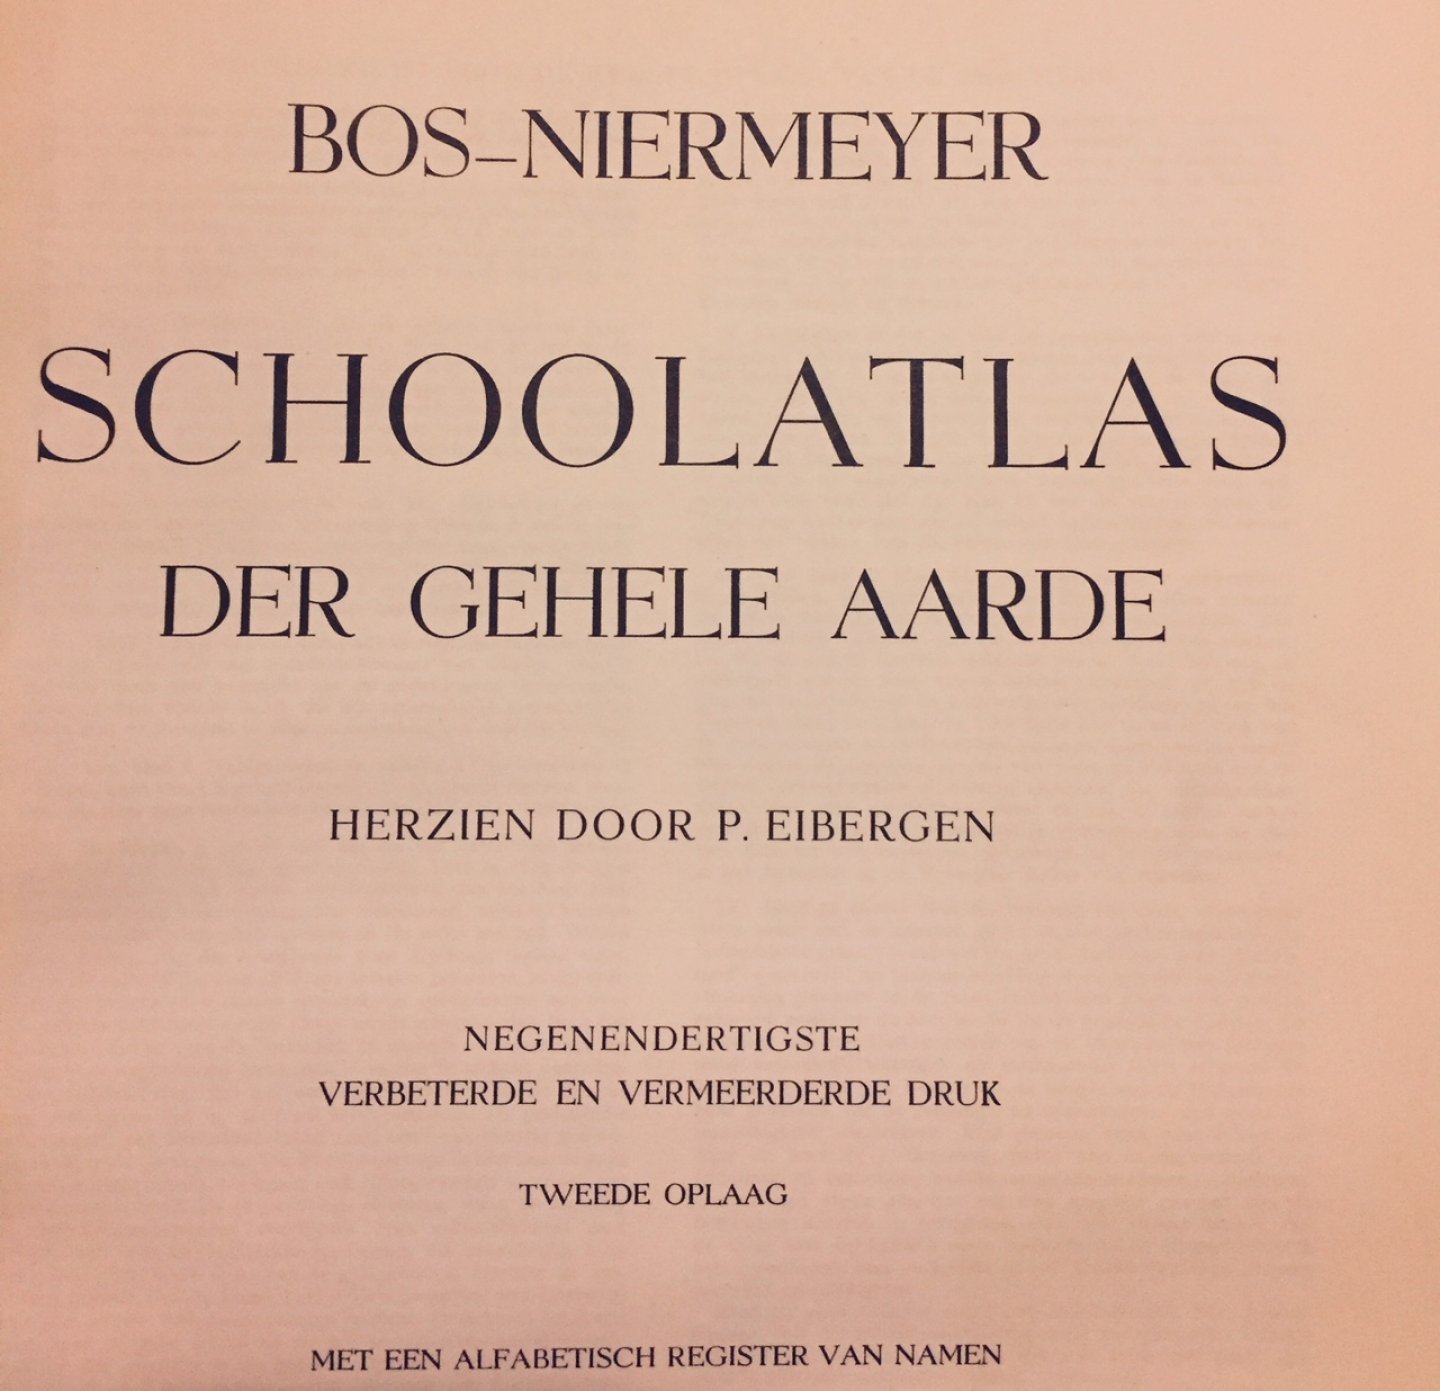 Bos, P.R.    Niermeyer J.F.  Herzien door P. Eibergen - Atlas der gehele aarde. / Schoolatlas der gehele aarde.